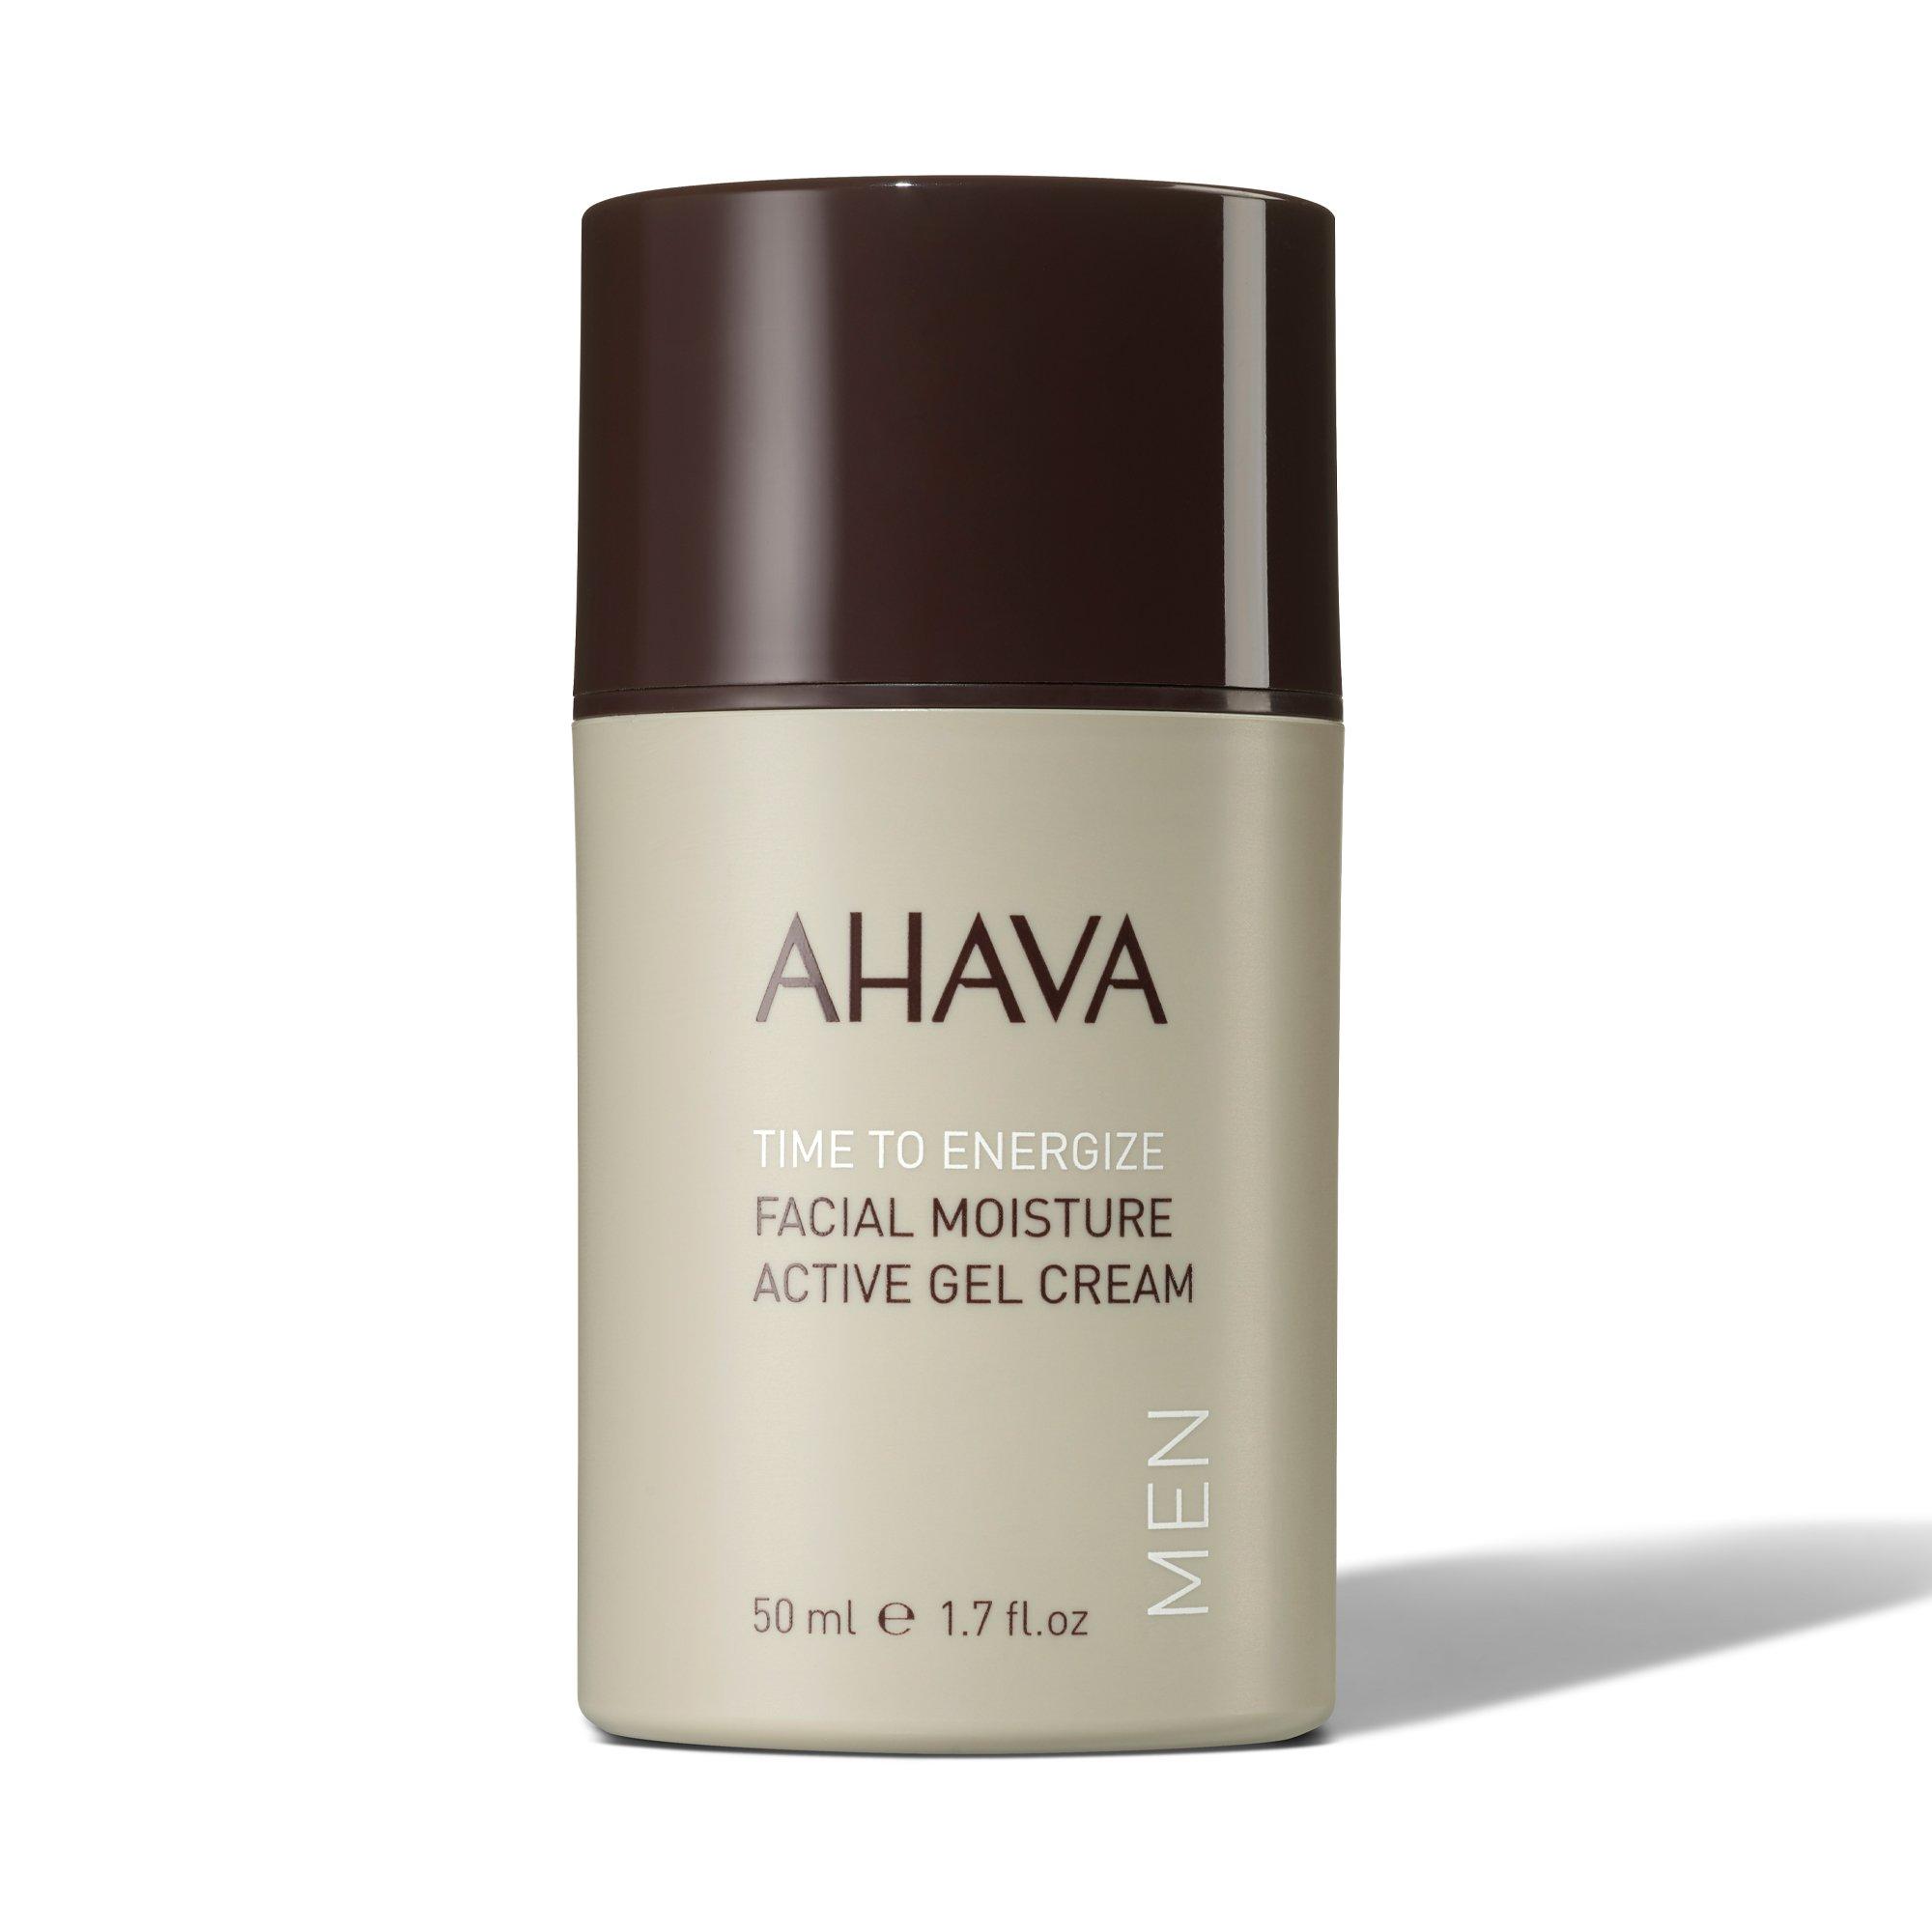 Image of AHAVA Facial Moisture Active Gel Cream Facial Moisture Active Gel Cream - 50ml